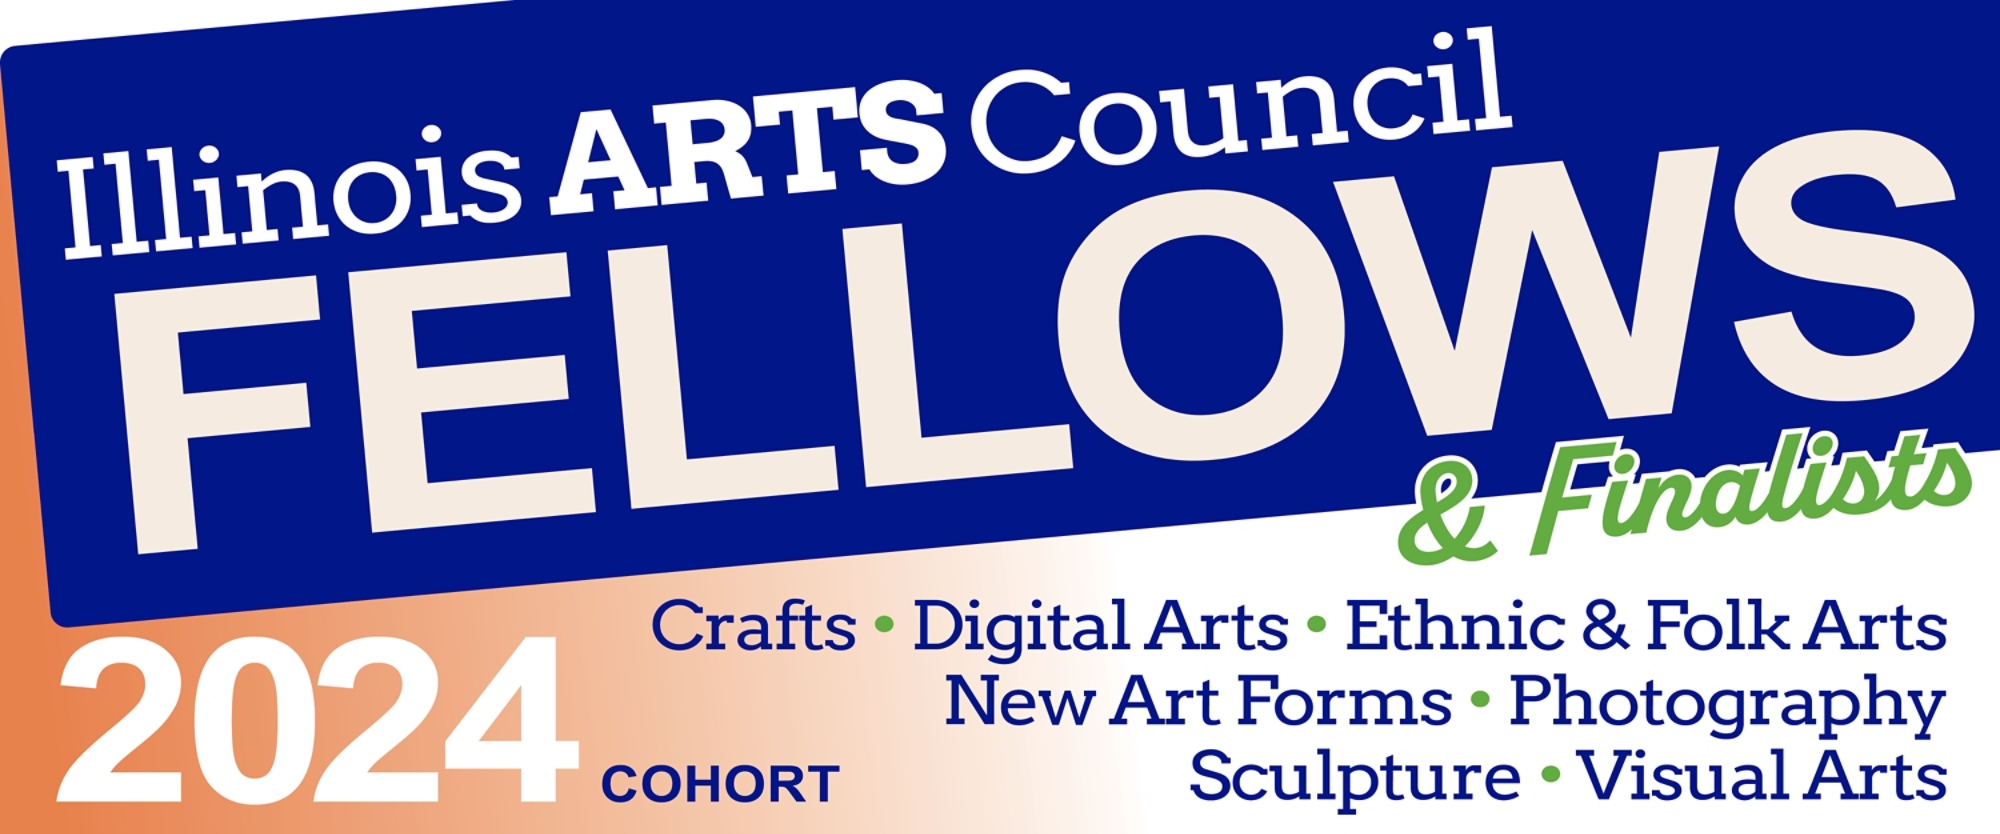 Illinois Arts Council Fellows Decorative Banner